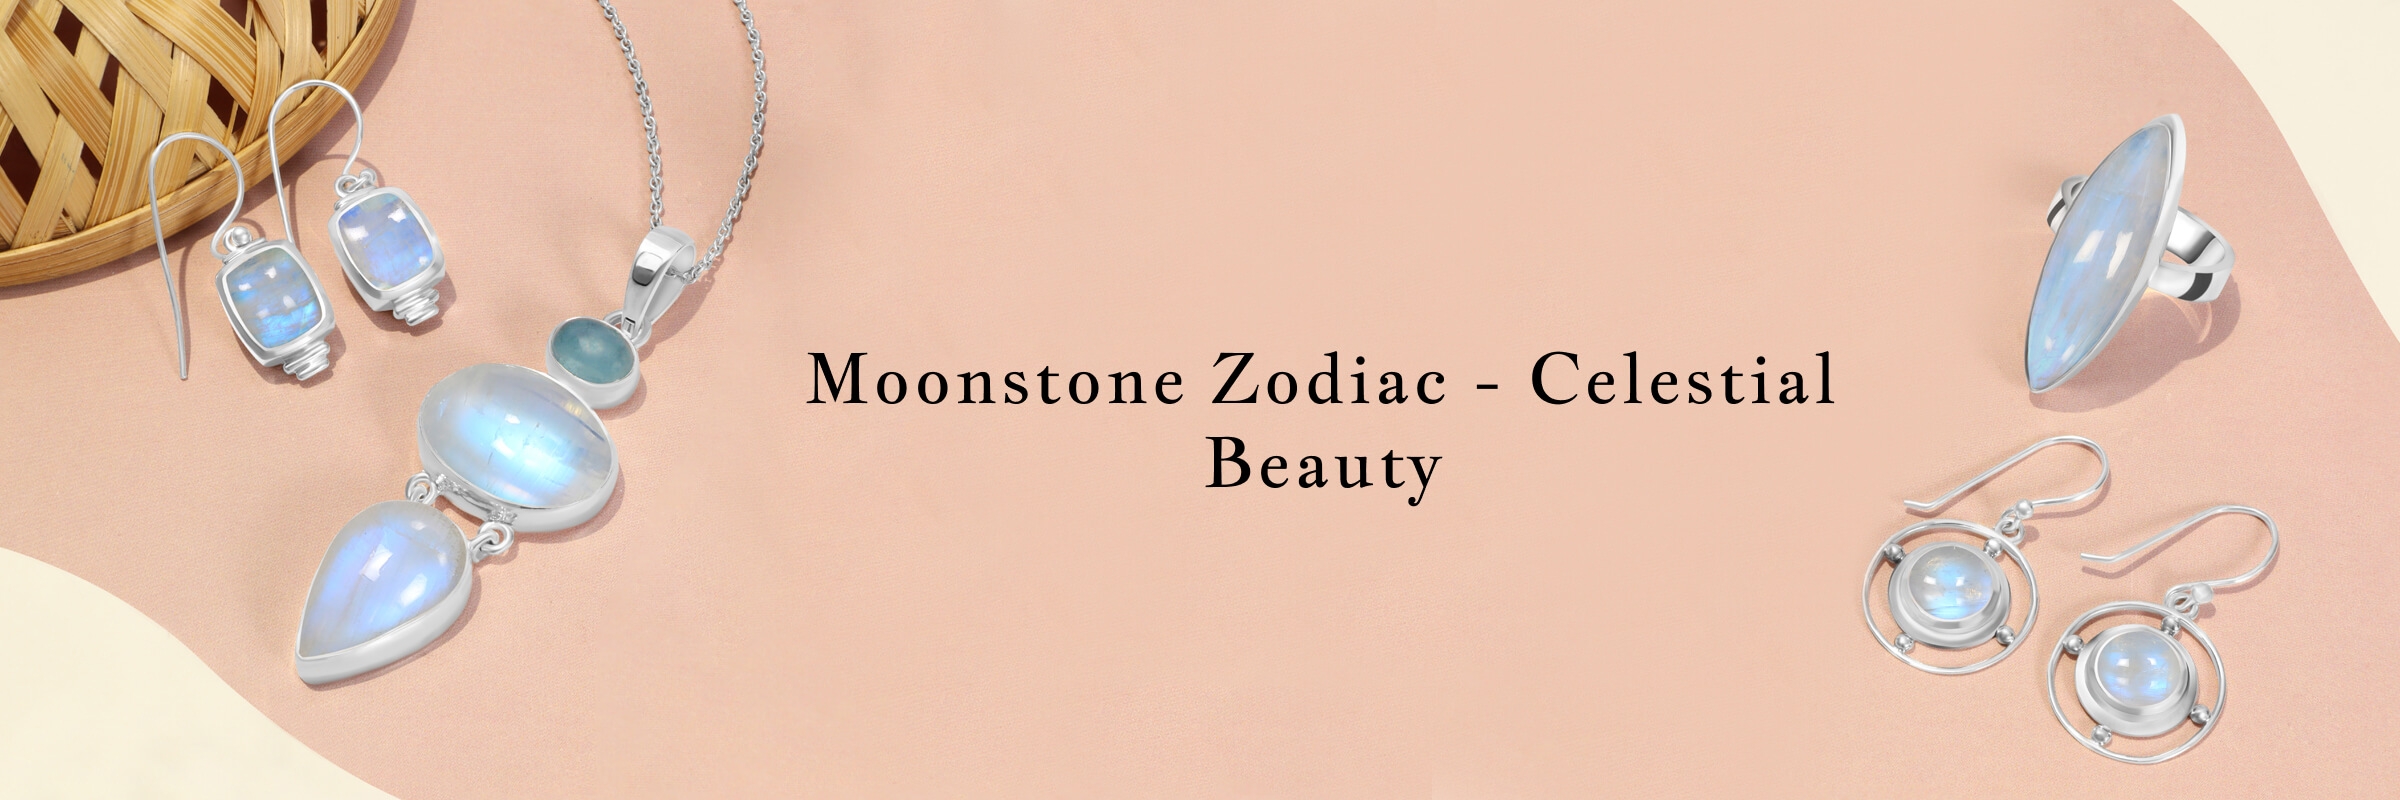 Zodiac moonstone